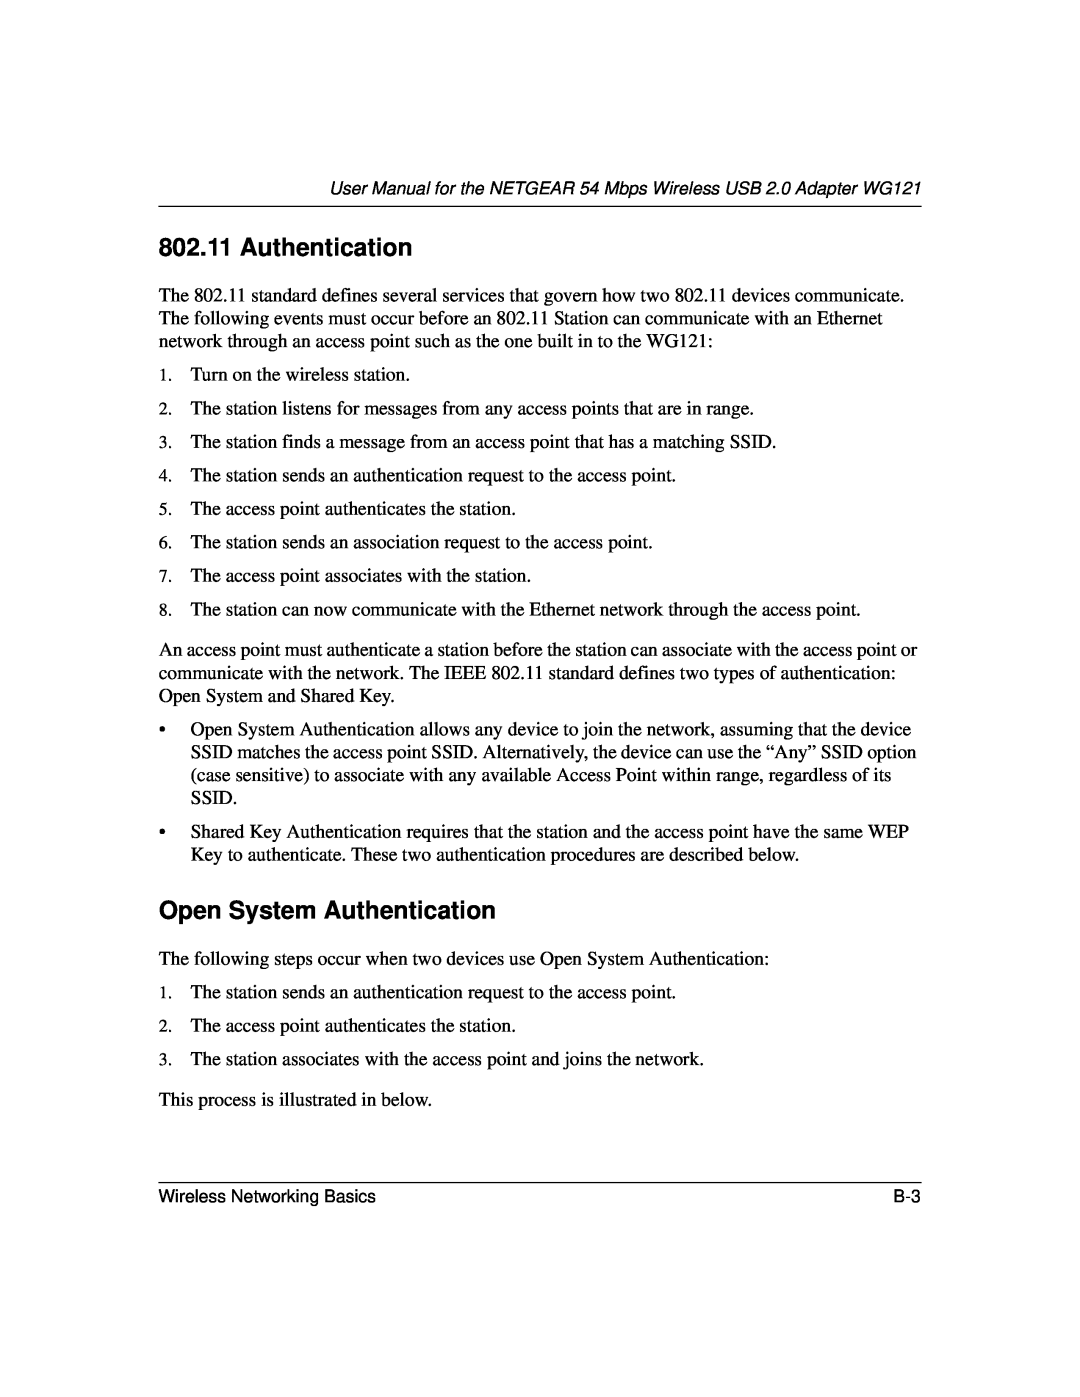 NETGEAR WG121 user manual Open System Authentication 